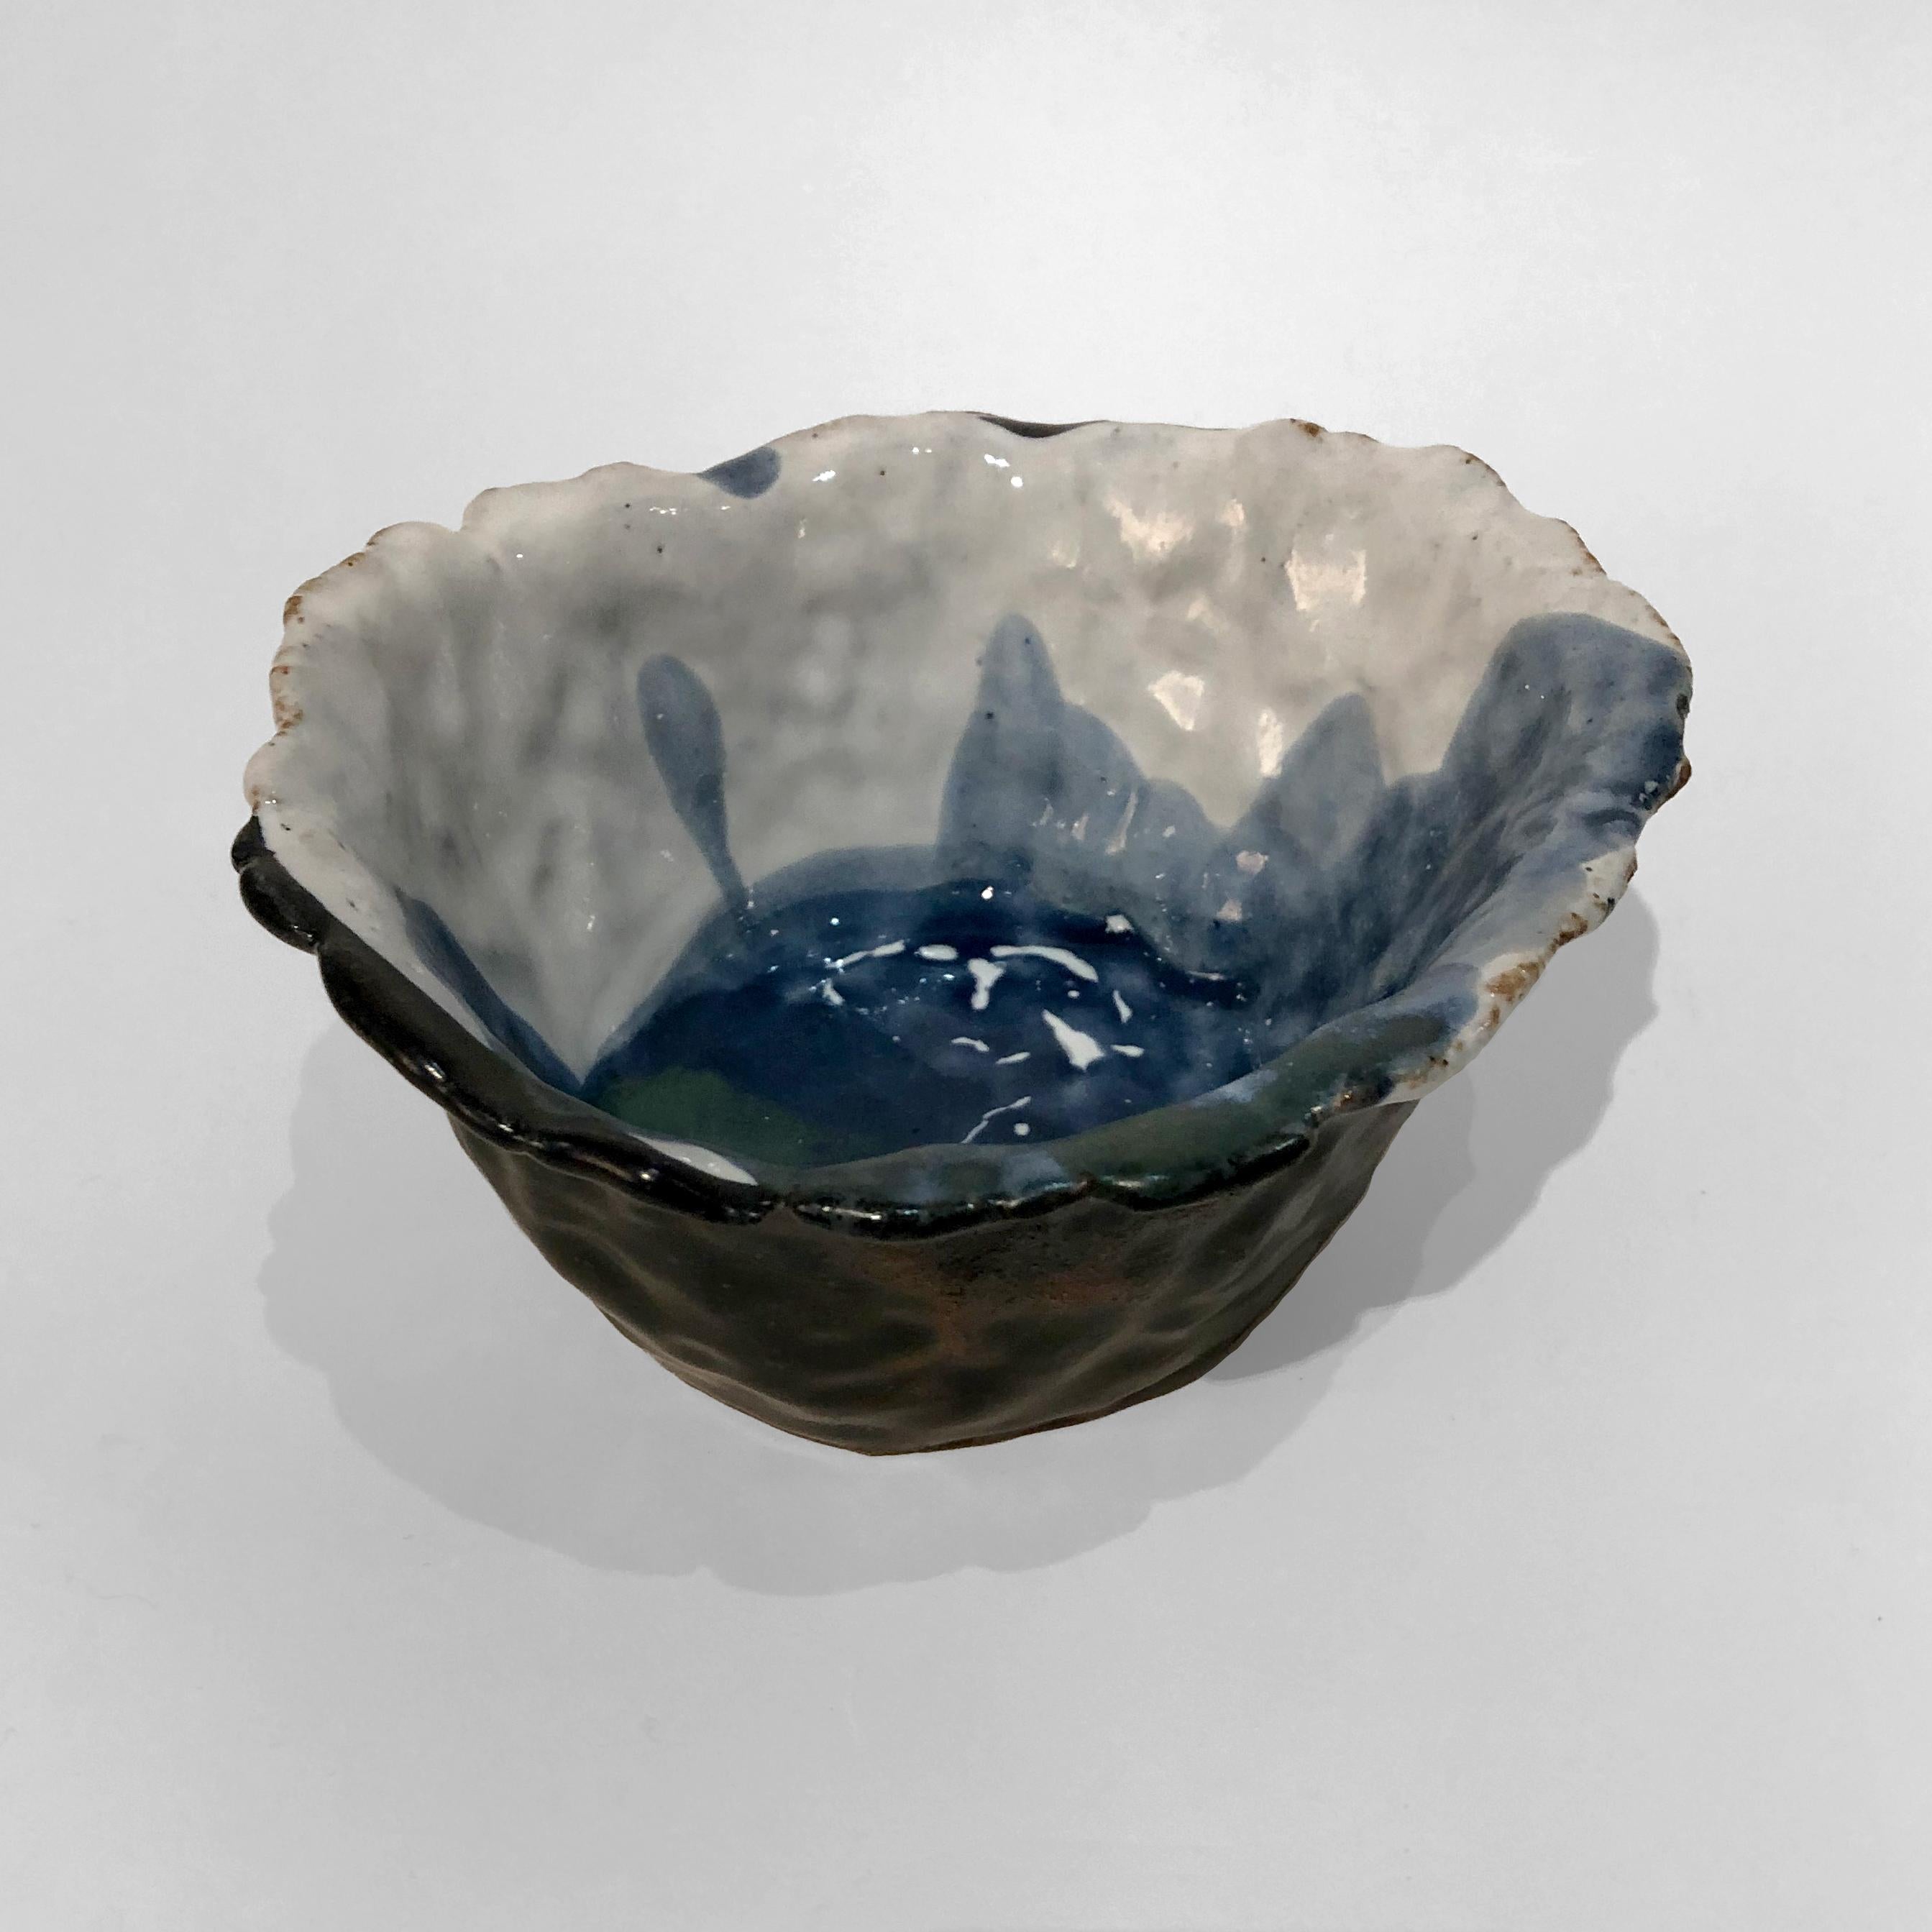 American Medium Handbuilt Stoneware Ceramic Bowl and Plate by Hannelore Freer